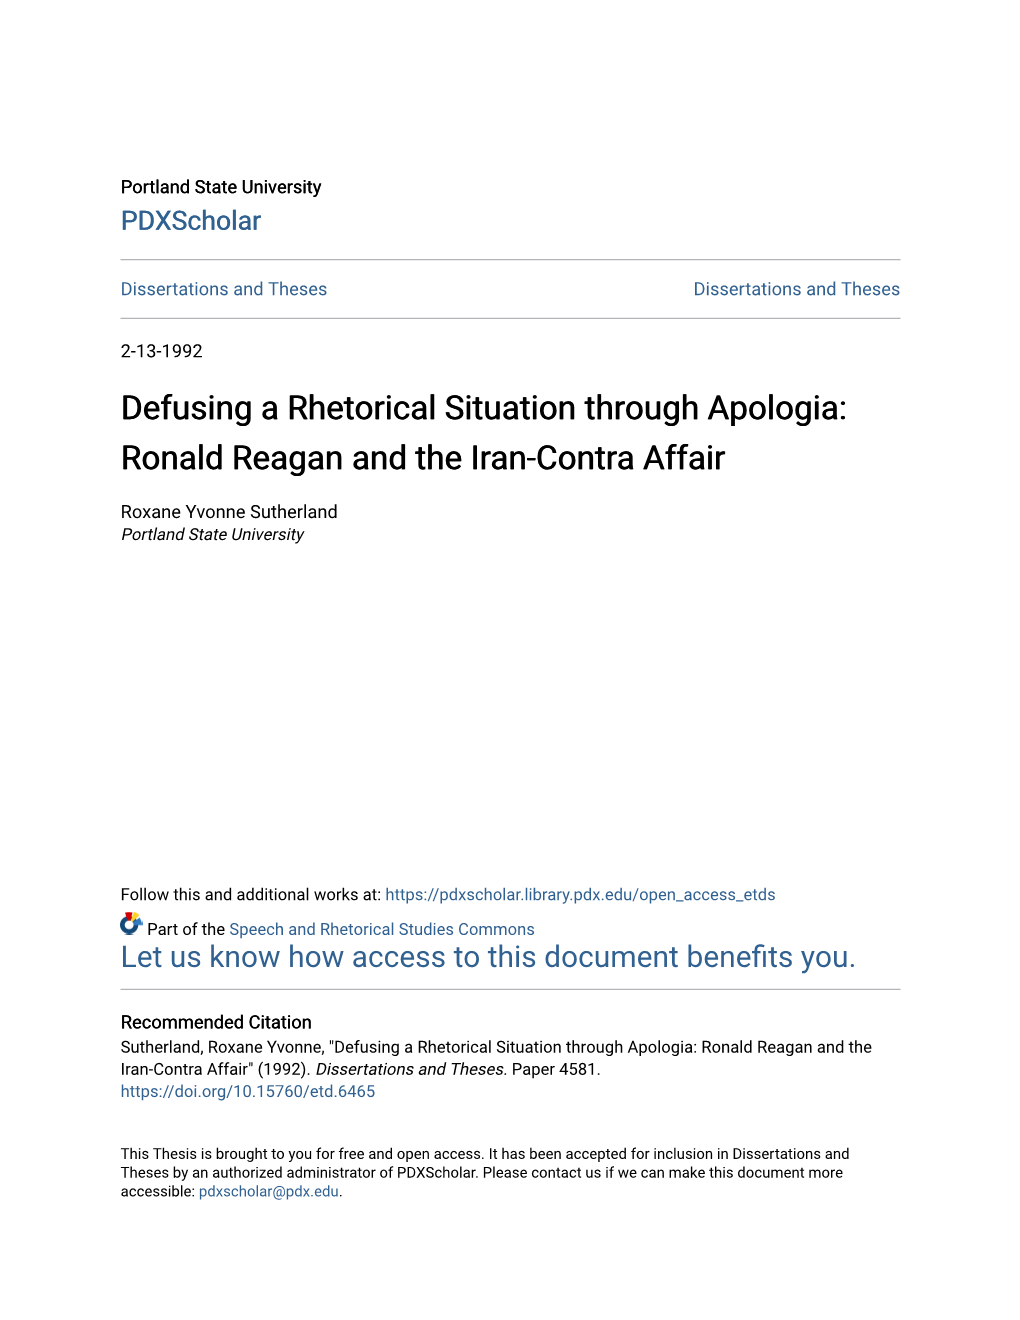 Defusing a Rhetorical Situation Through Apologia: Ronald Reagan and the Iran-Contra Affair